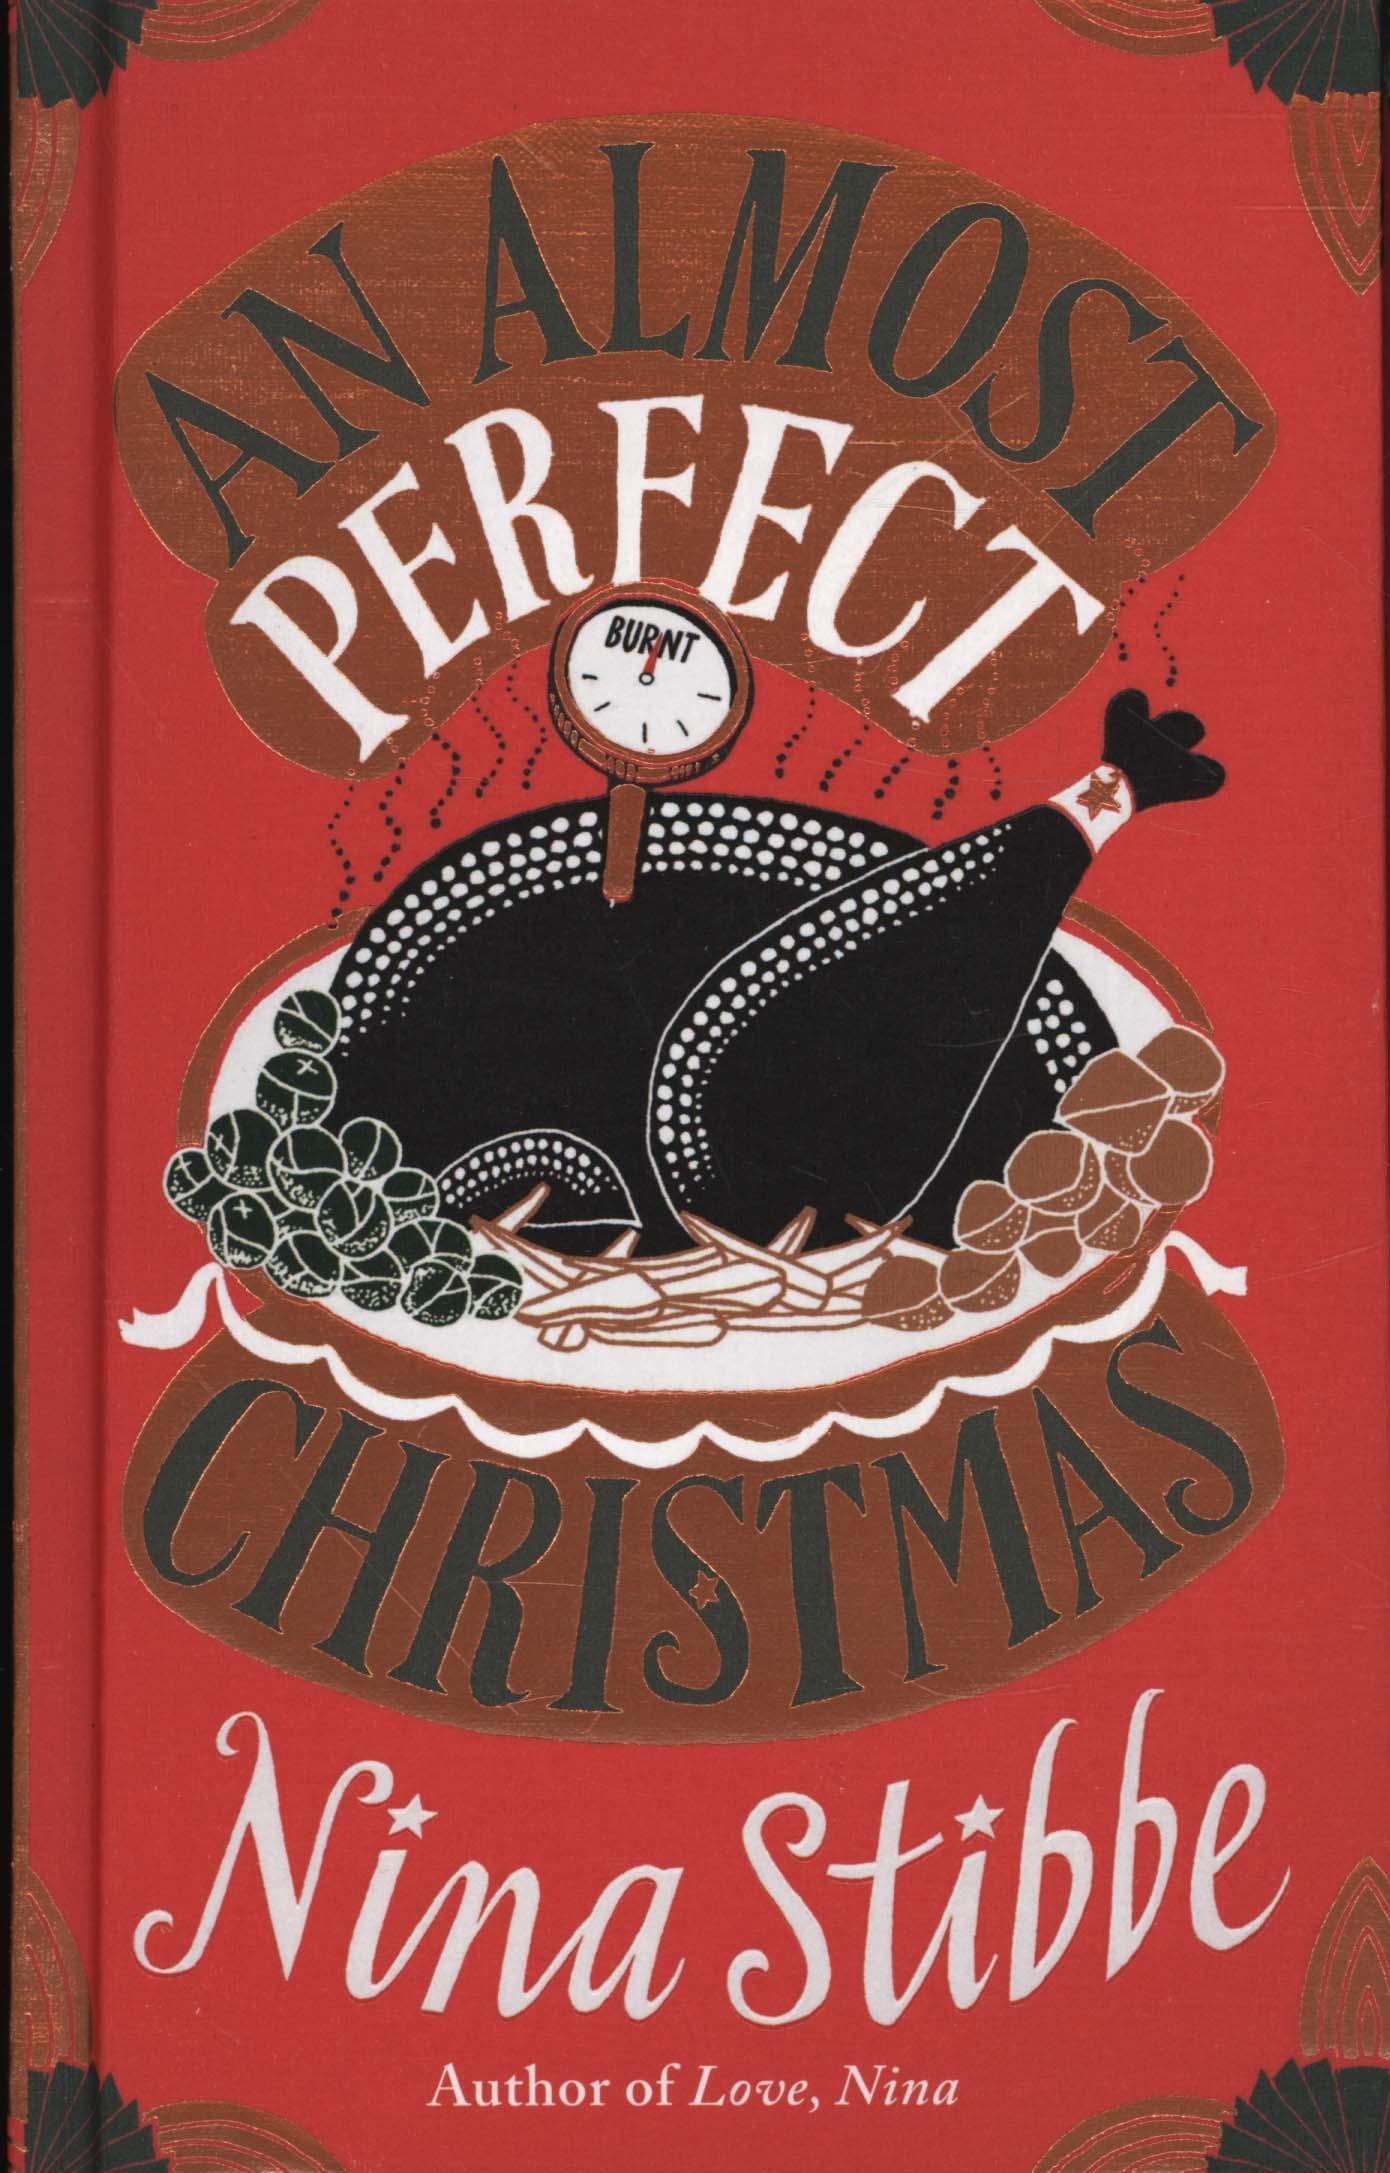 Almost Perfect Christmas - Nina Stibbe